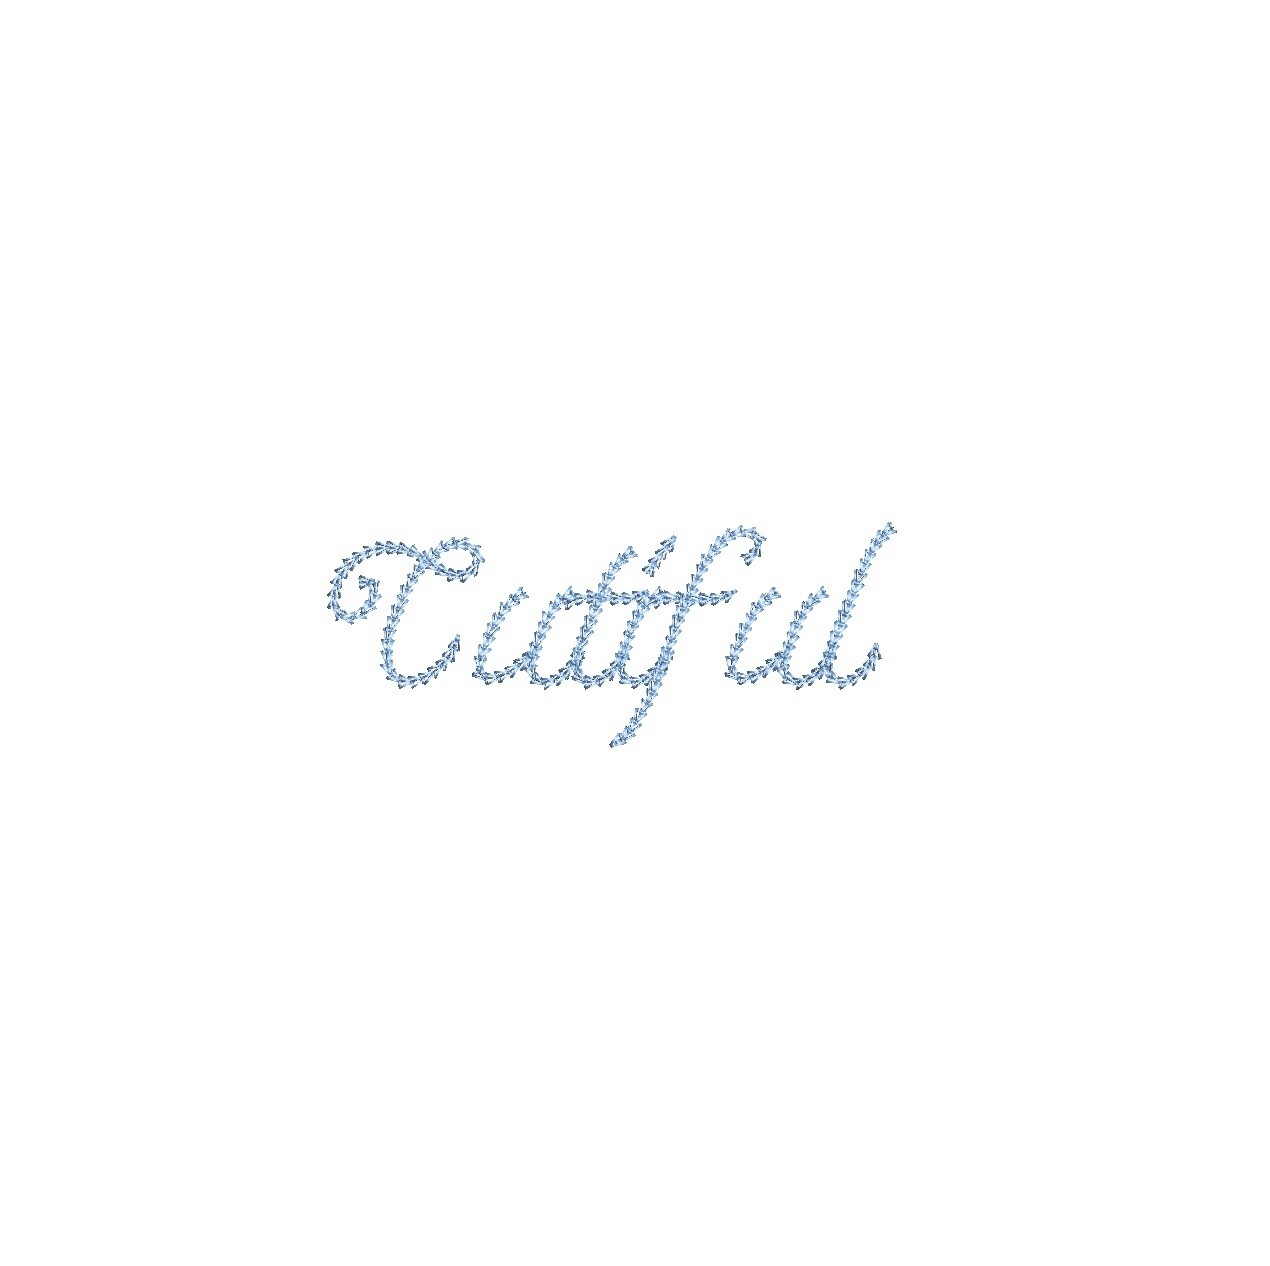 Cutiful Chain Stitch ESA font